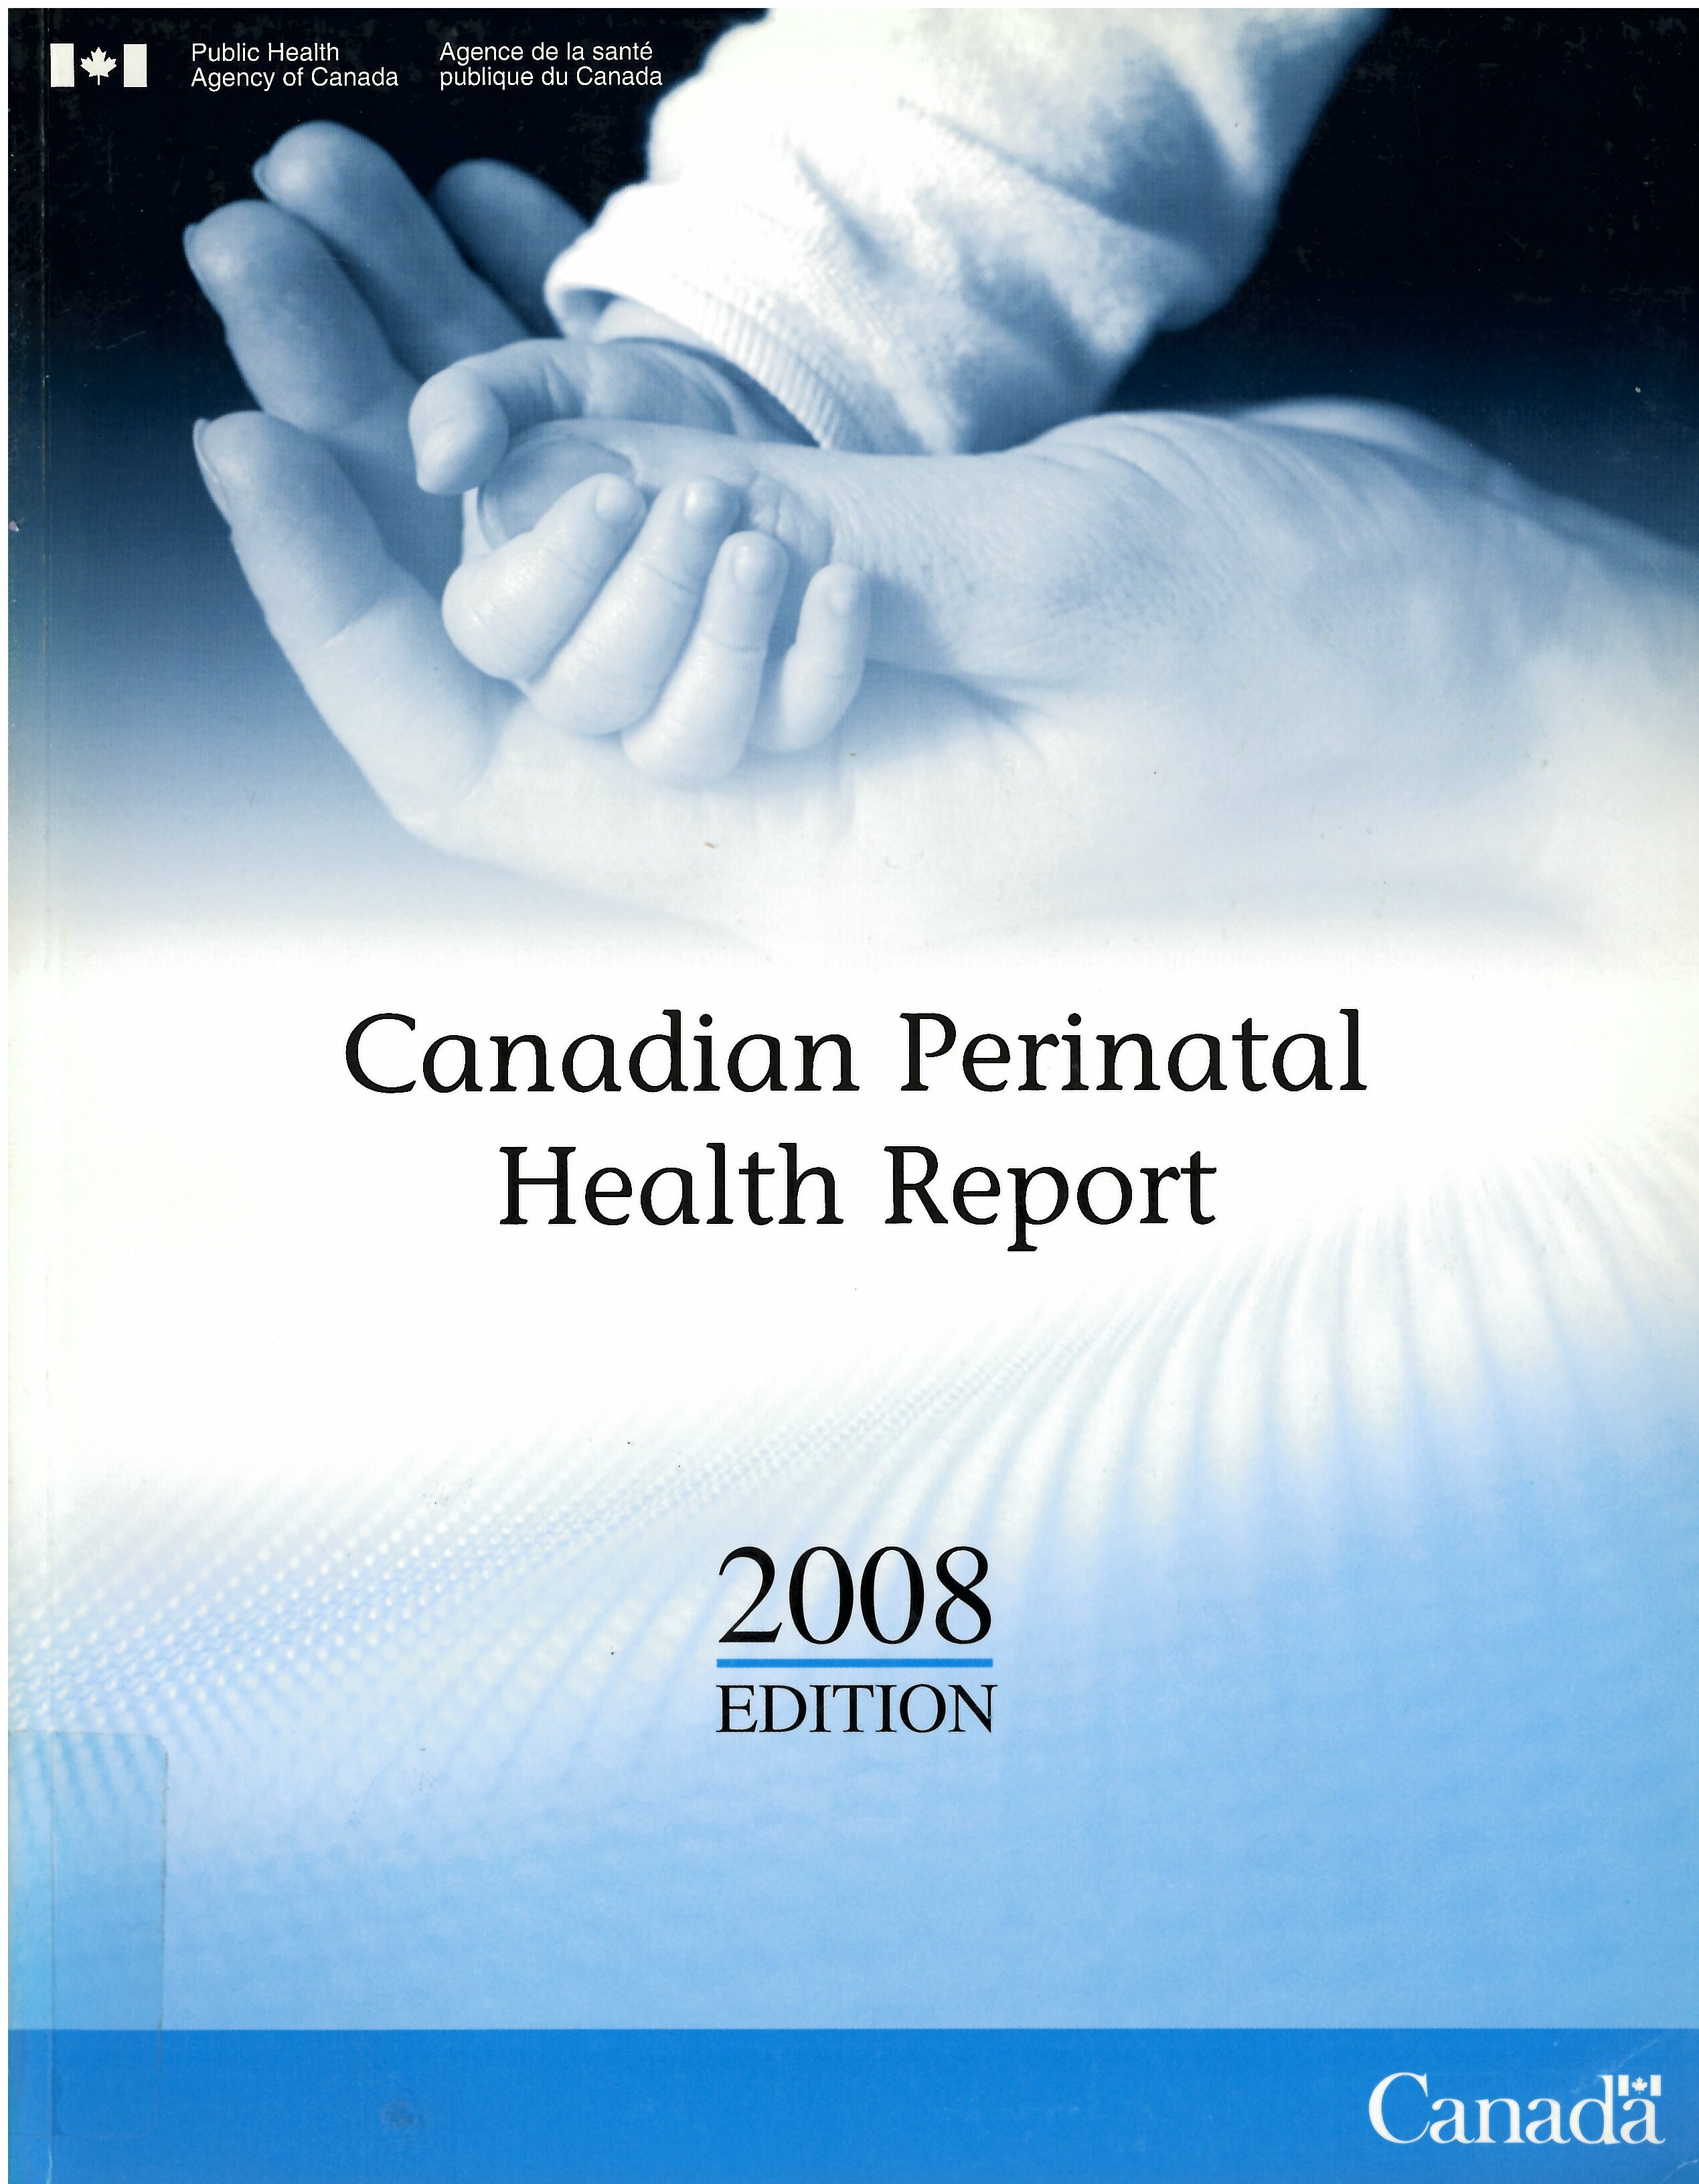 Canadian perinatal health report